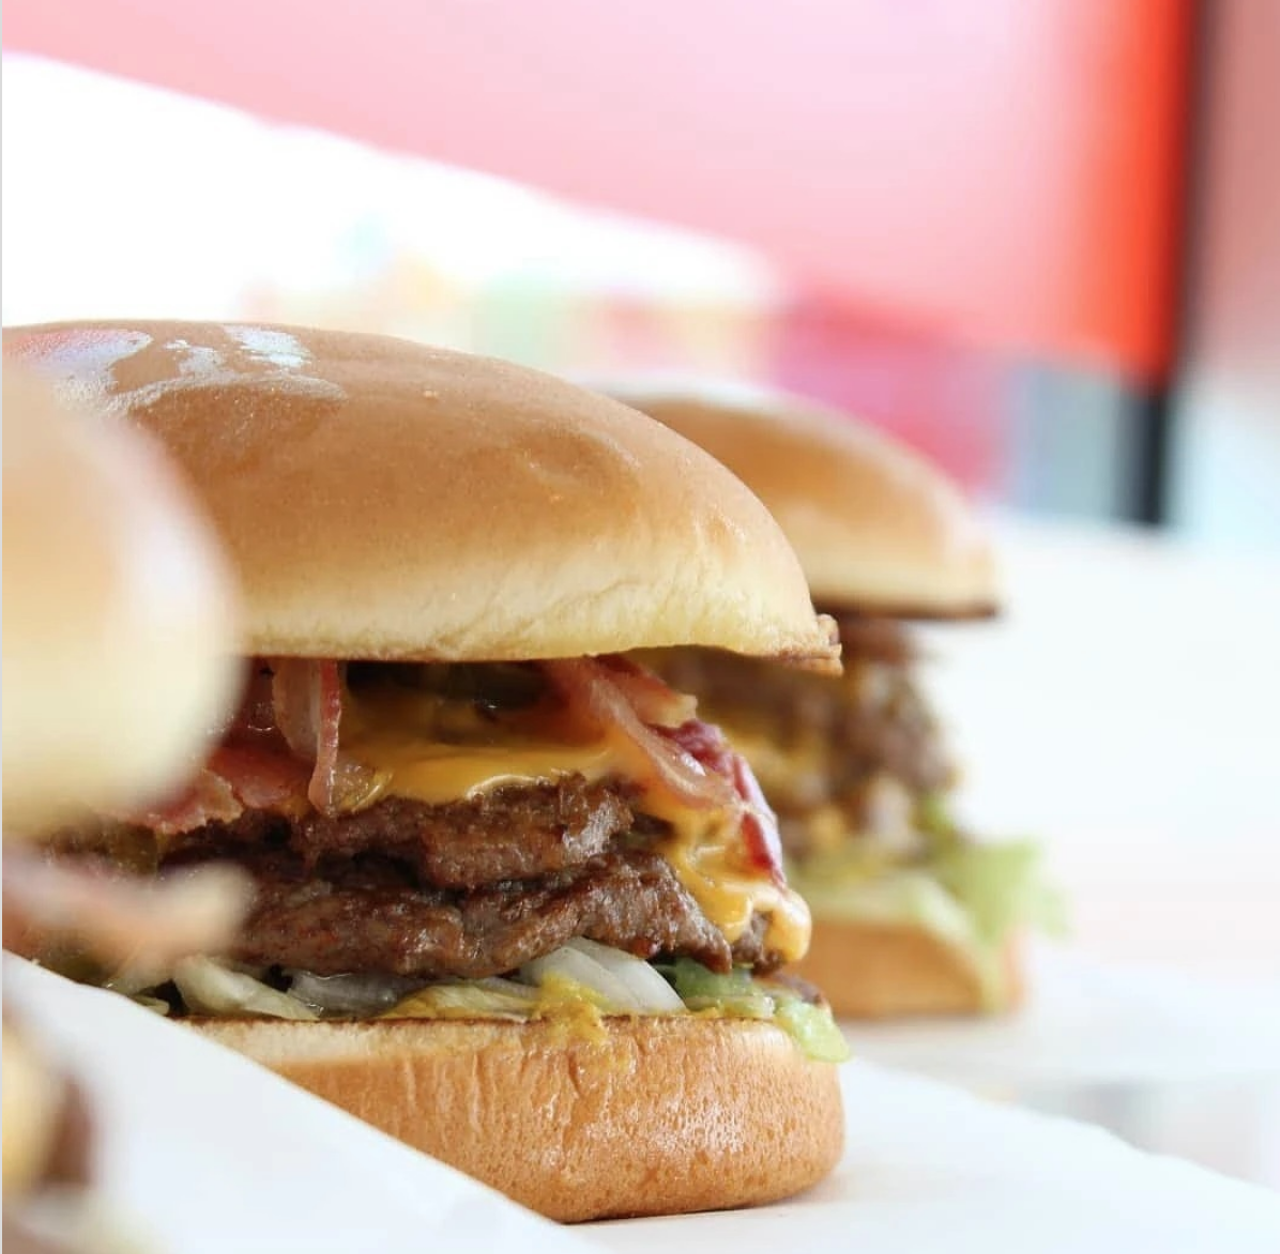 Best Burger
Burger Boy, Multiple locations, burgerboysa.com
Photo via Instagram / burgerboysa